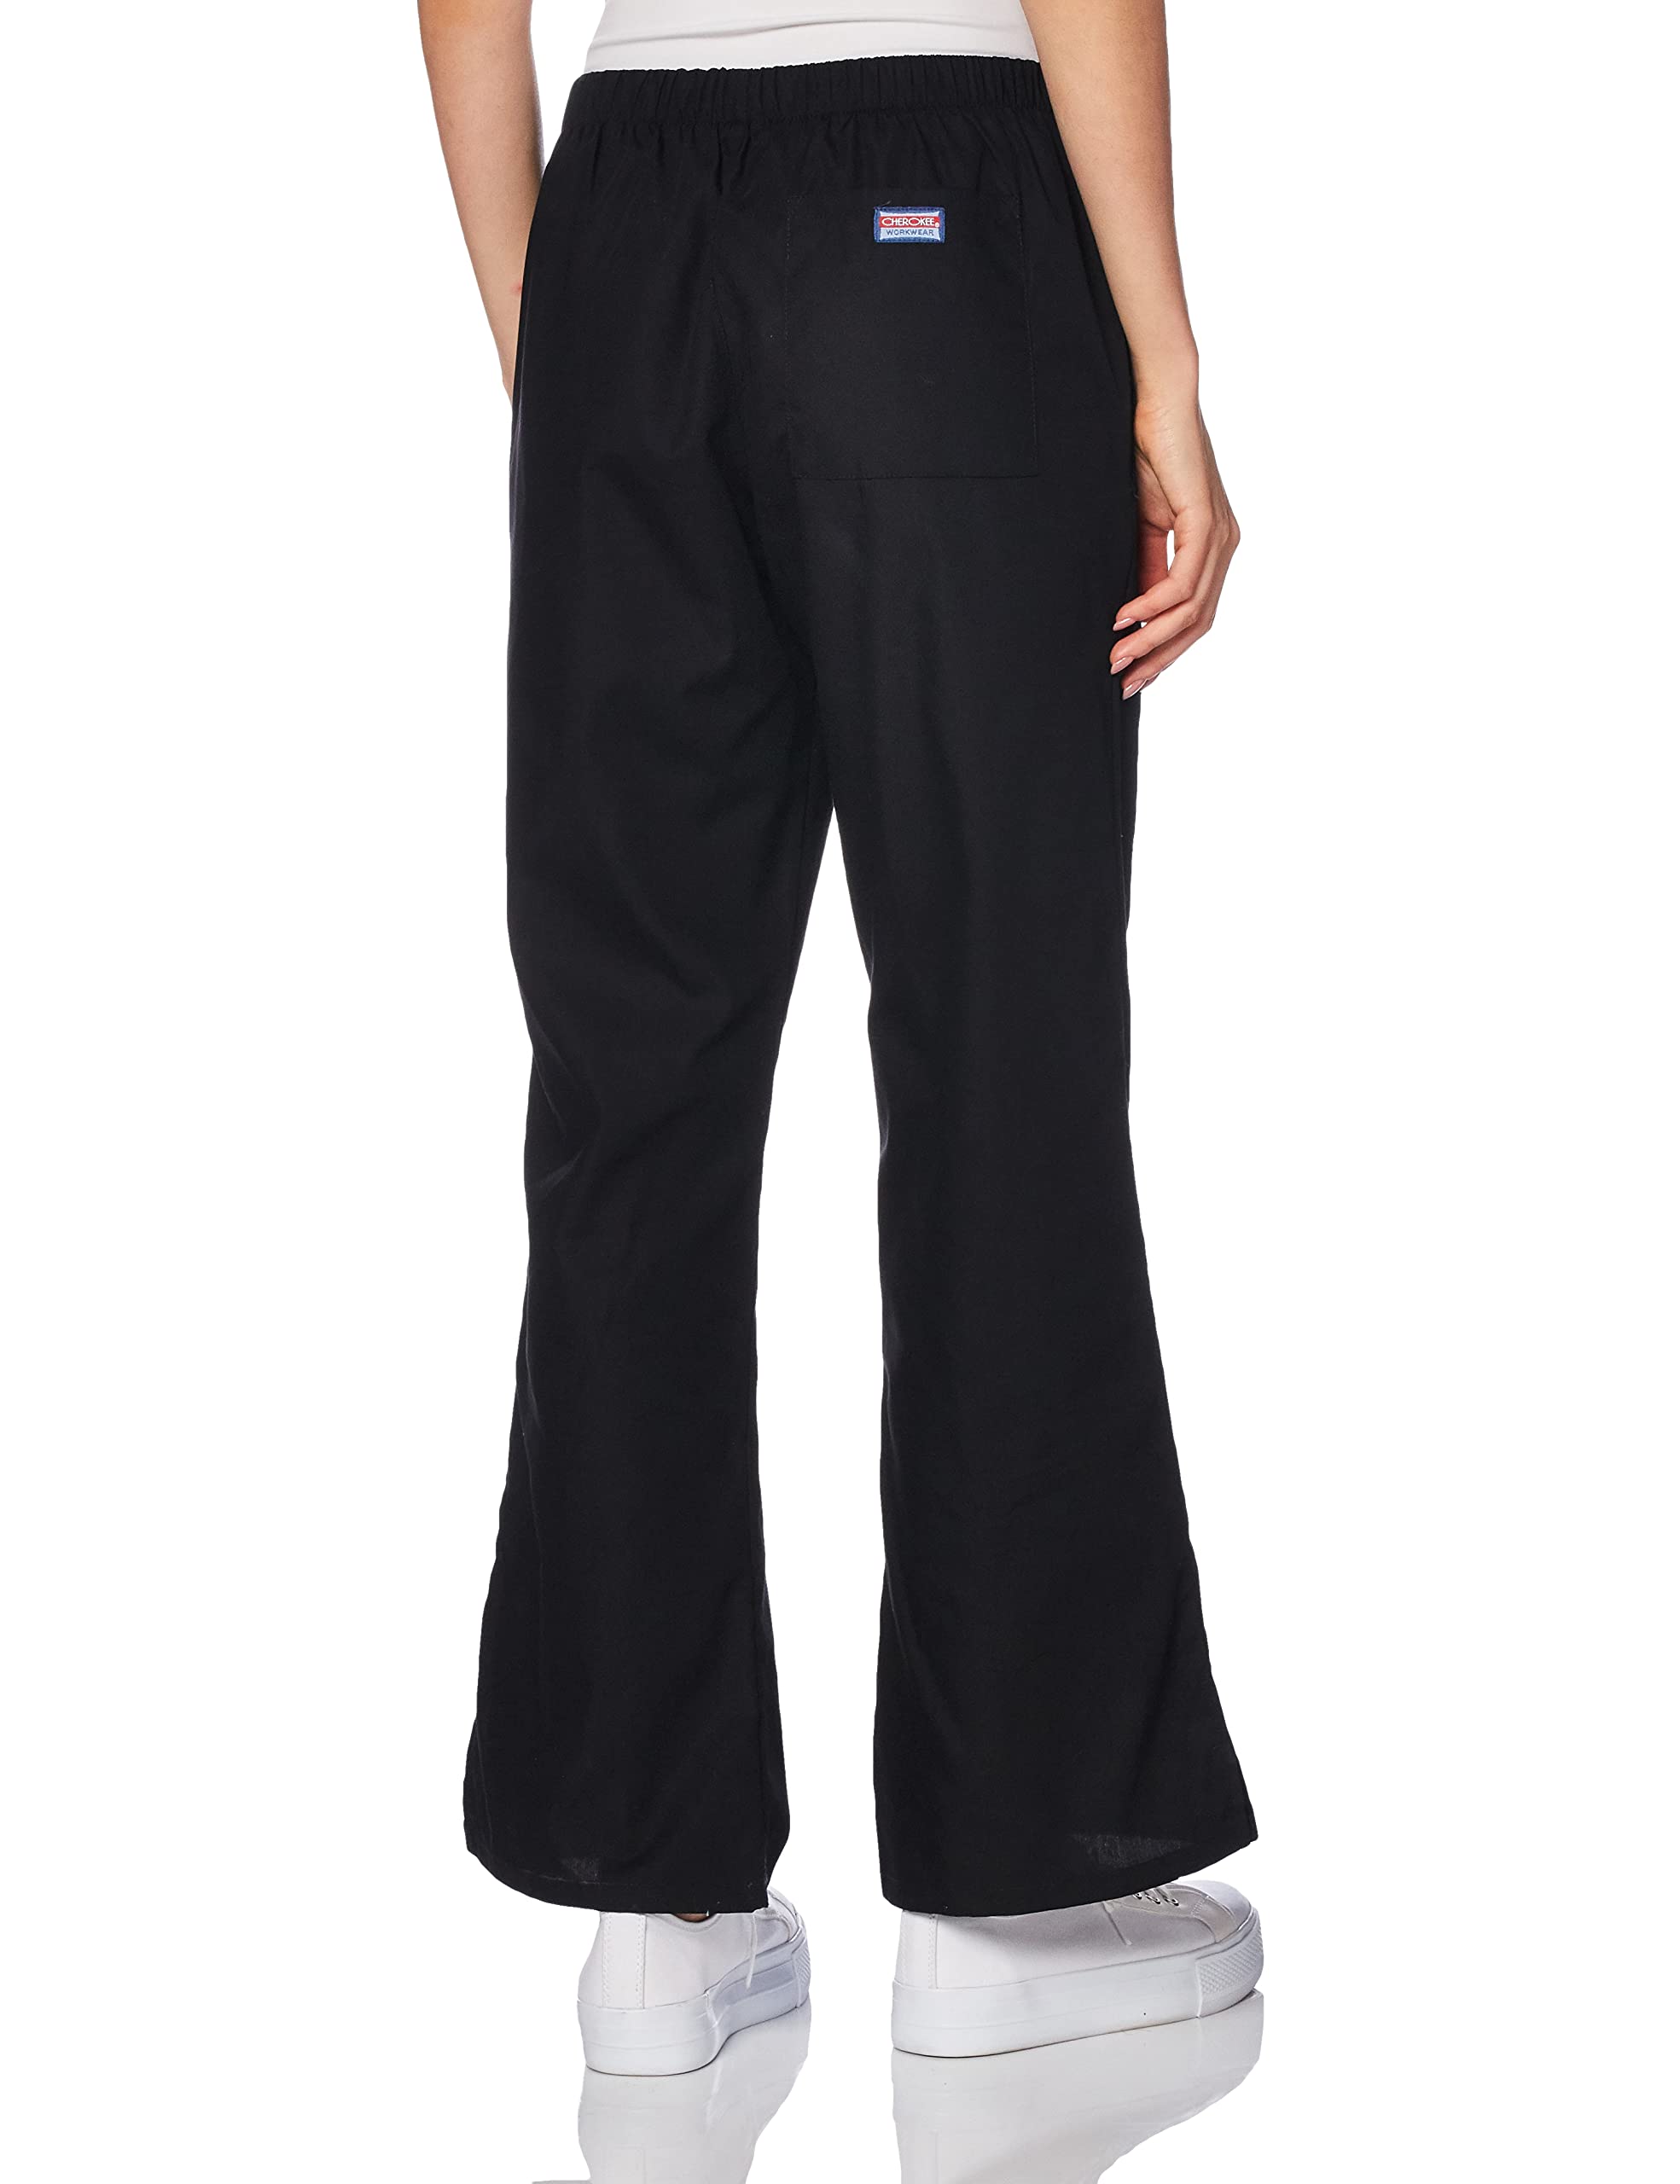 Scrub Pants for Women Workwear Originals Drawstring Waist with Flare Leg 4101